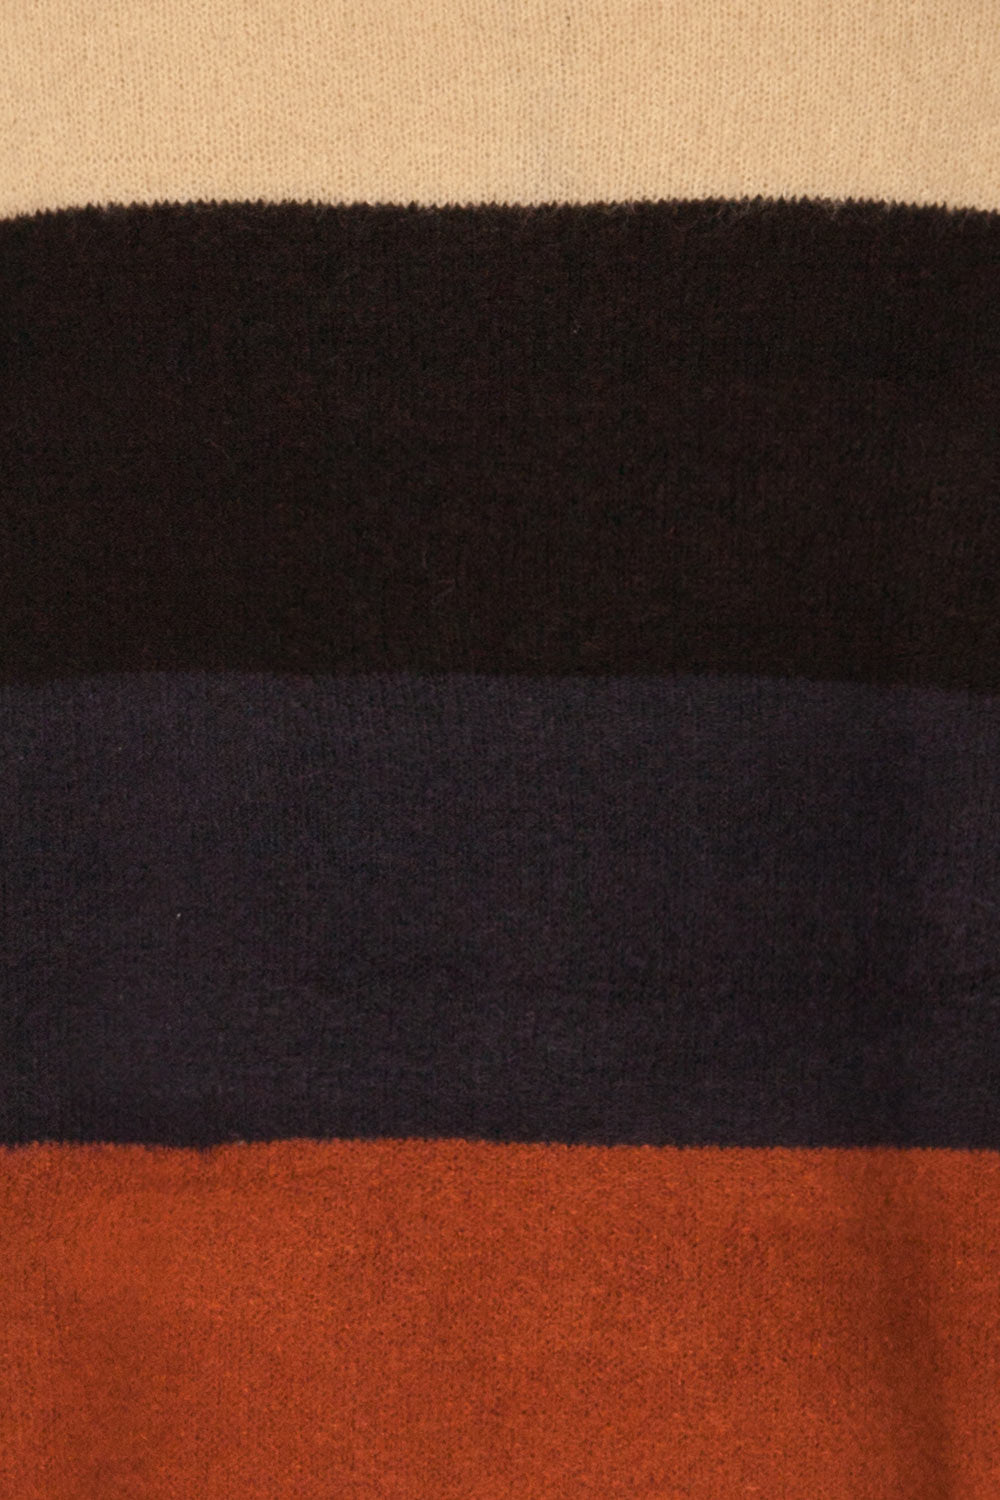 Faarland Black and Brown Striped Knit Sweater | La Petite Garçonne fabric detail 